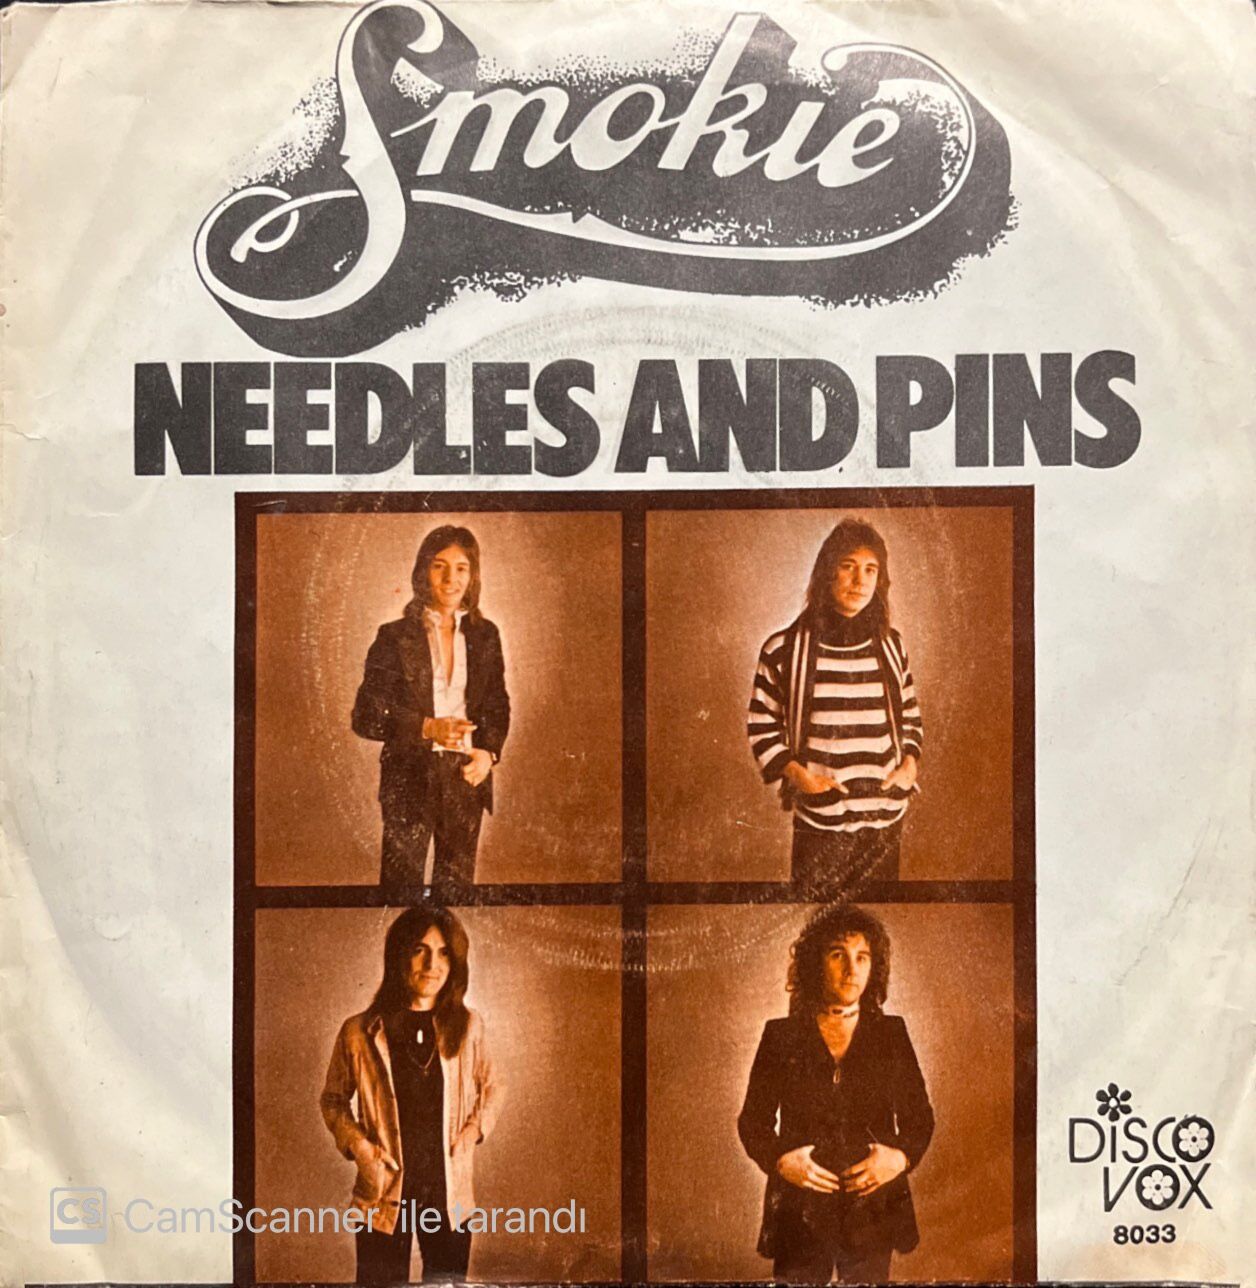 Smokie Needles And Pins 45lik Plak